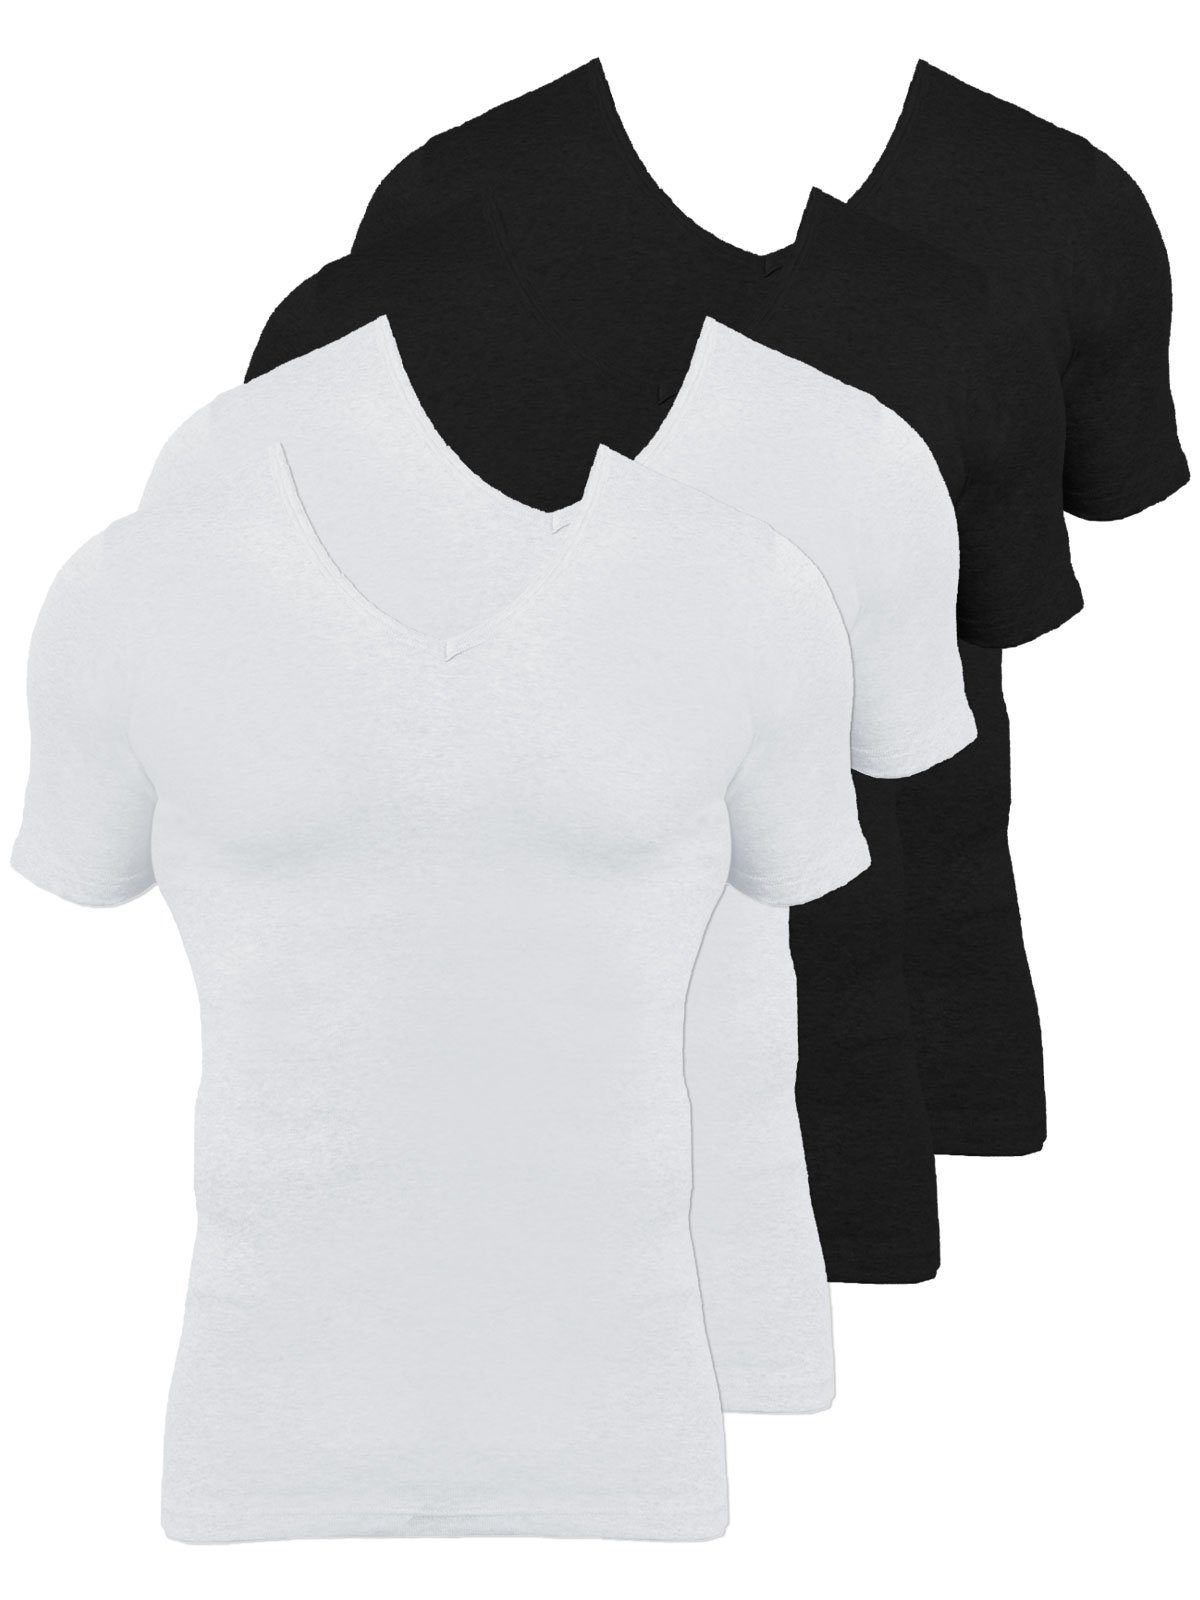 KUMPF Unterziehshirt 4er Sparpack Herren T-Shirt Bio Cotton (Spar-Set, 4-St) hohe Markenqualität weiss schwarz